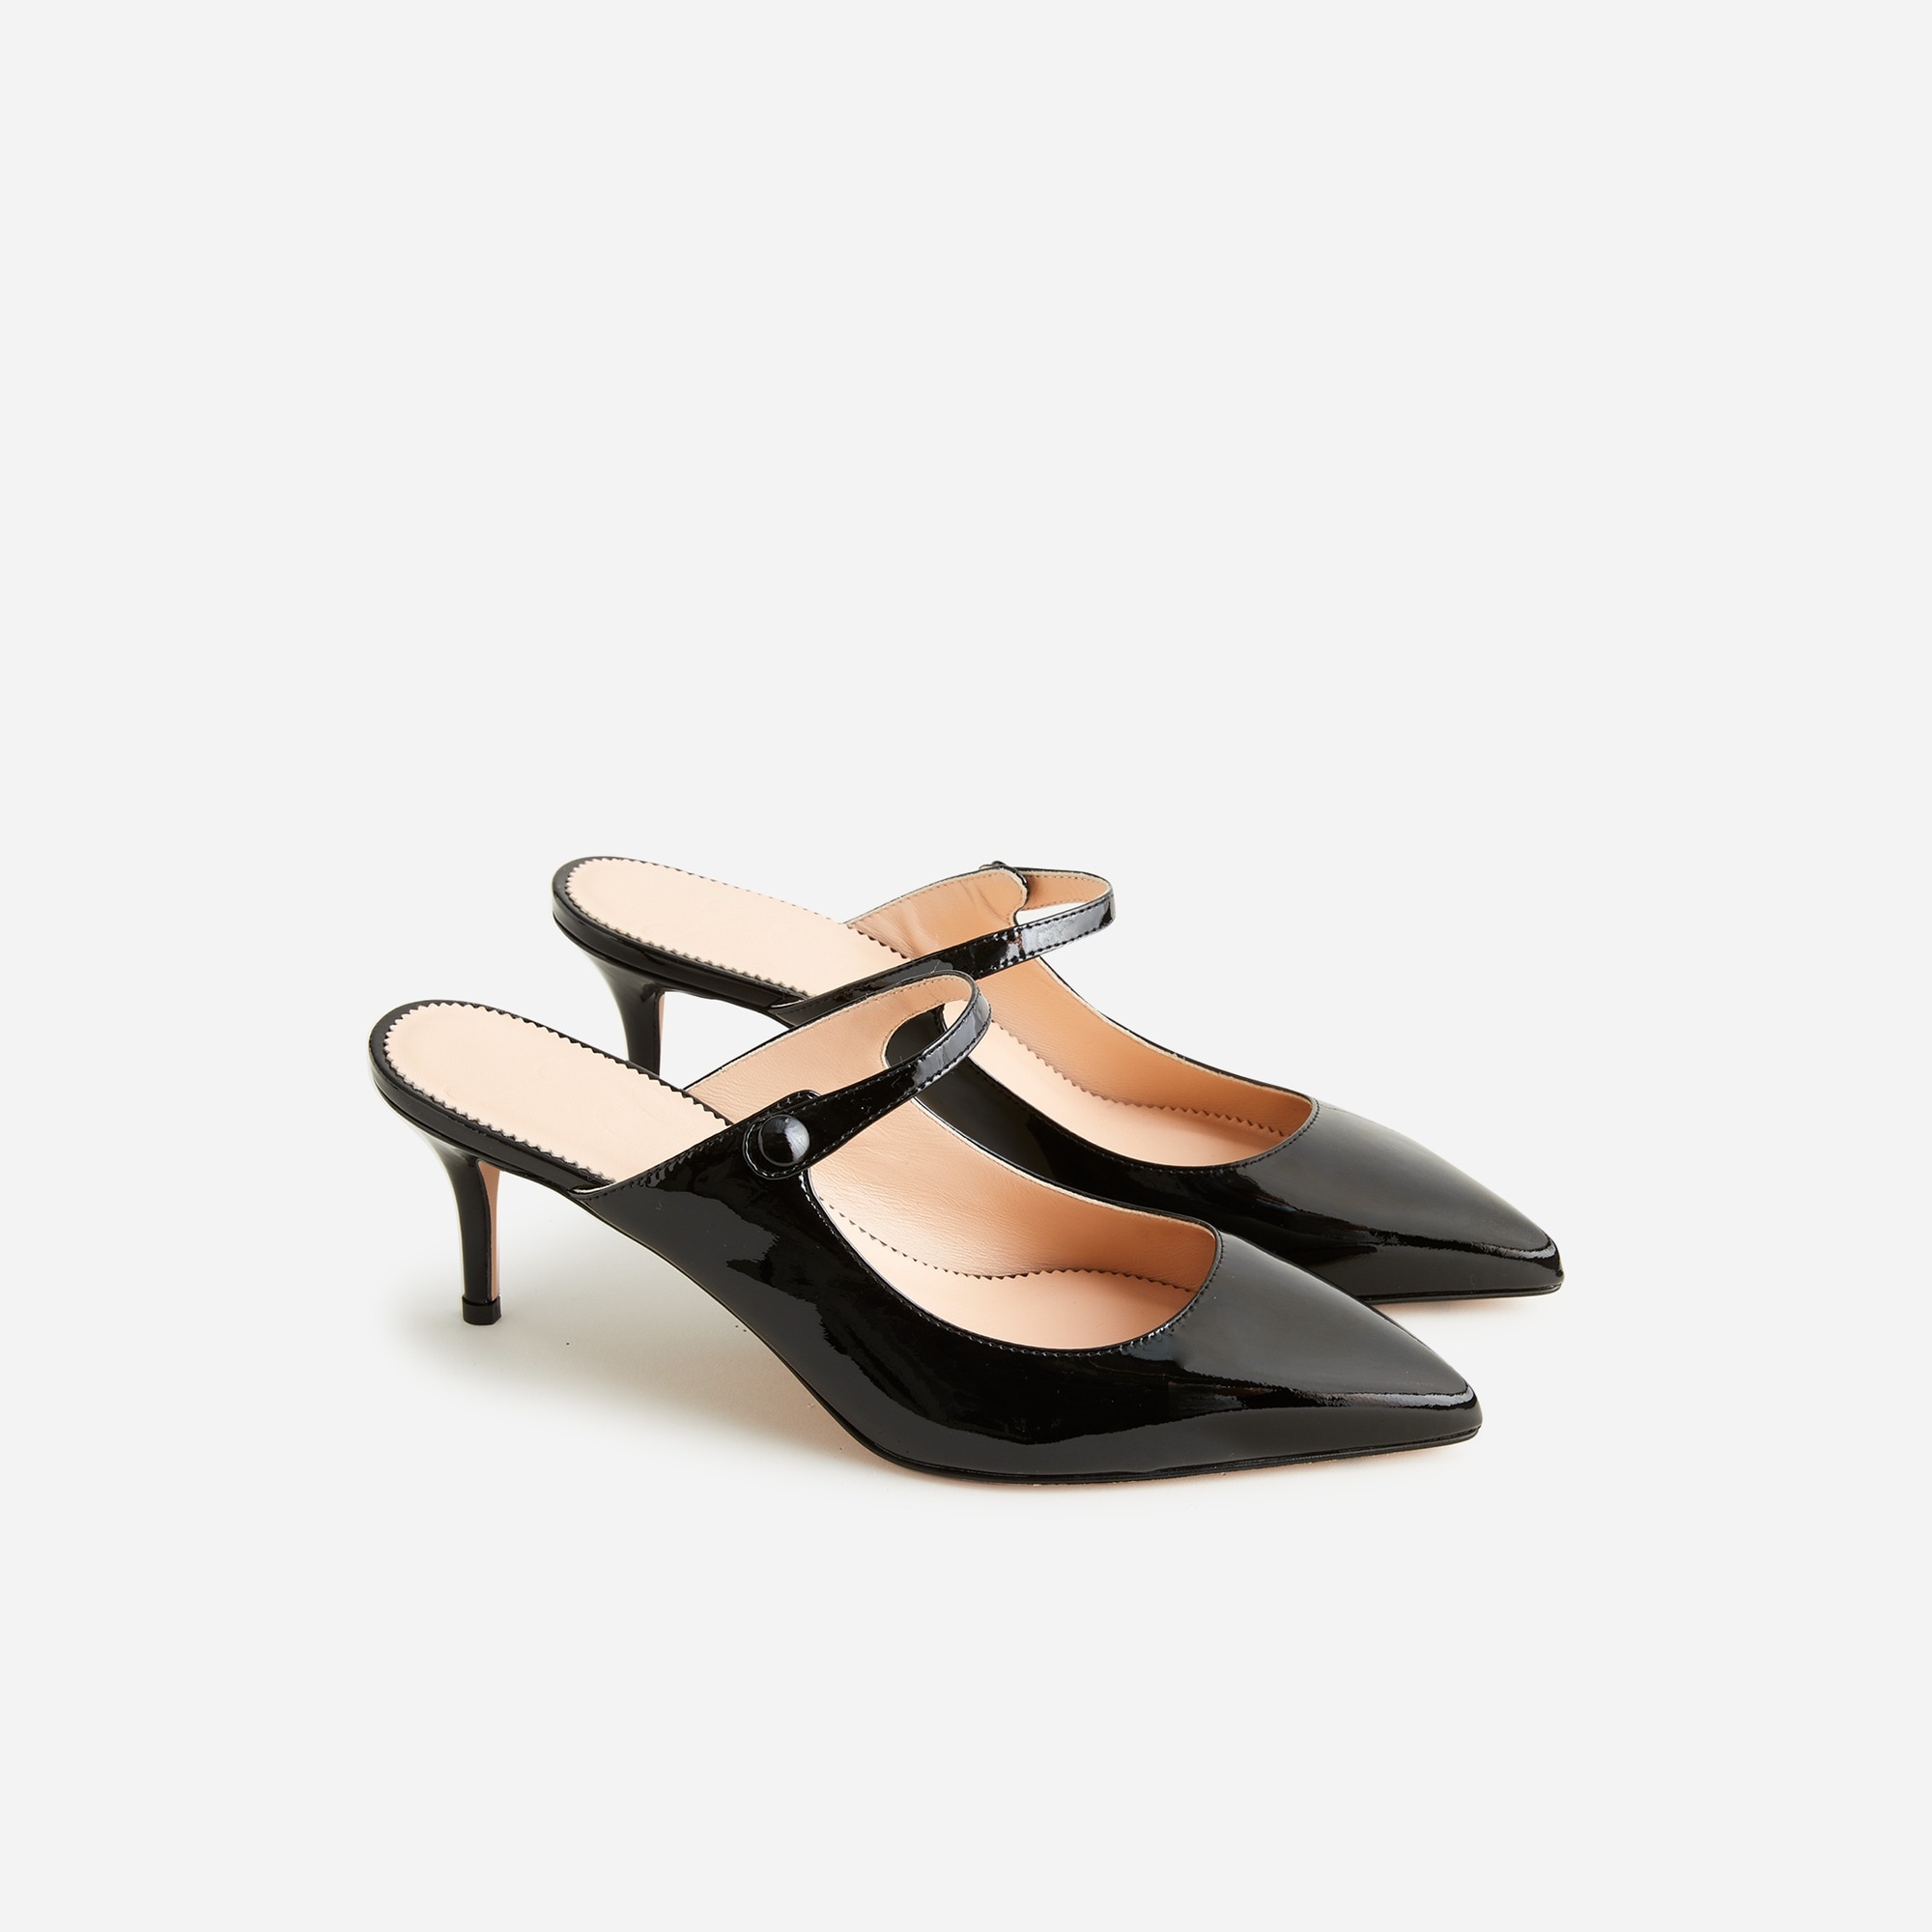  Colette mule heels in Italian patent leather